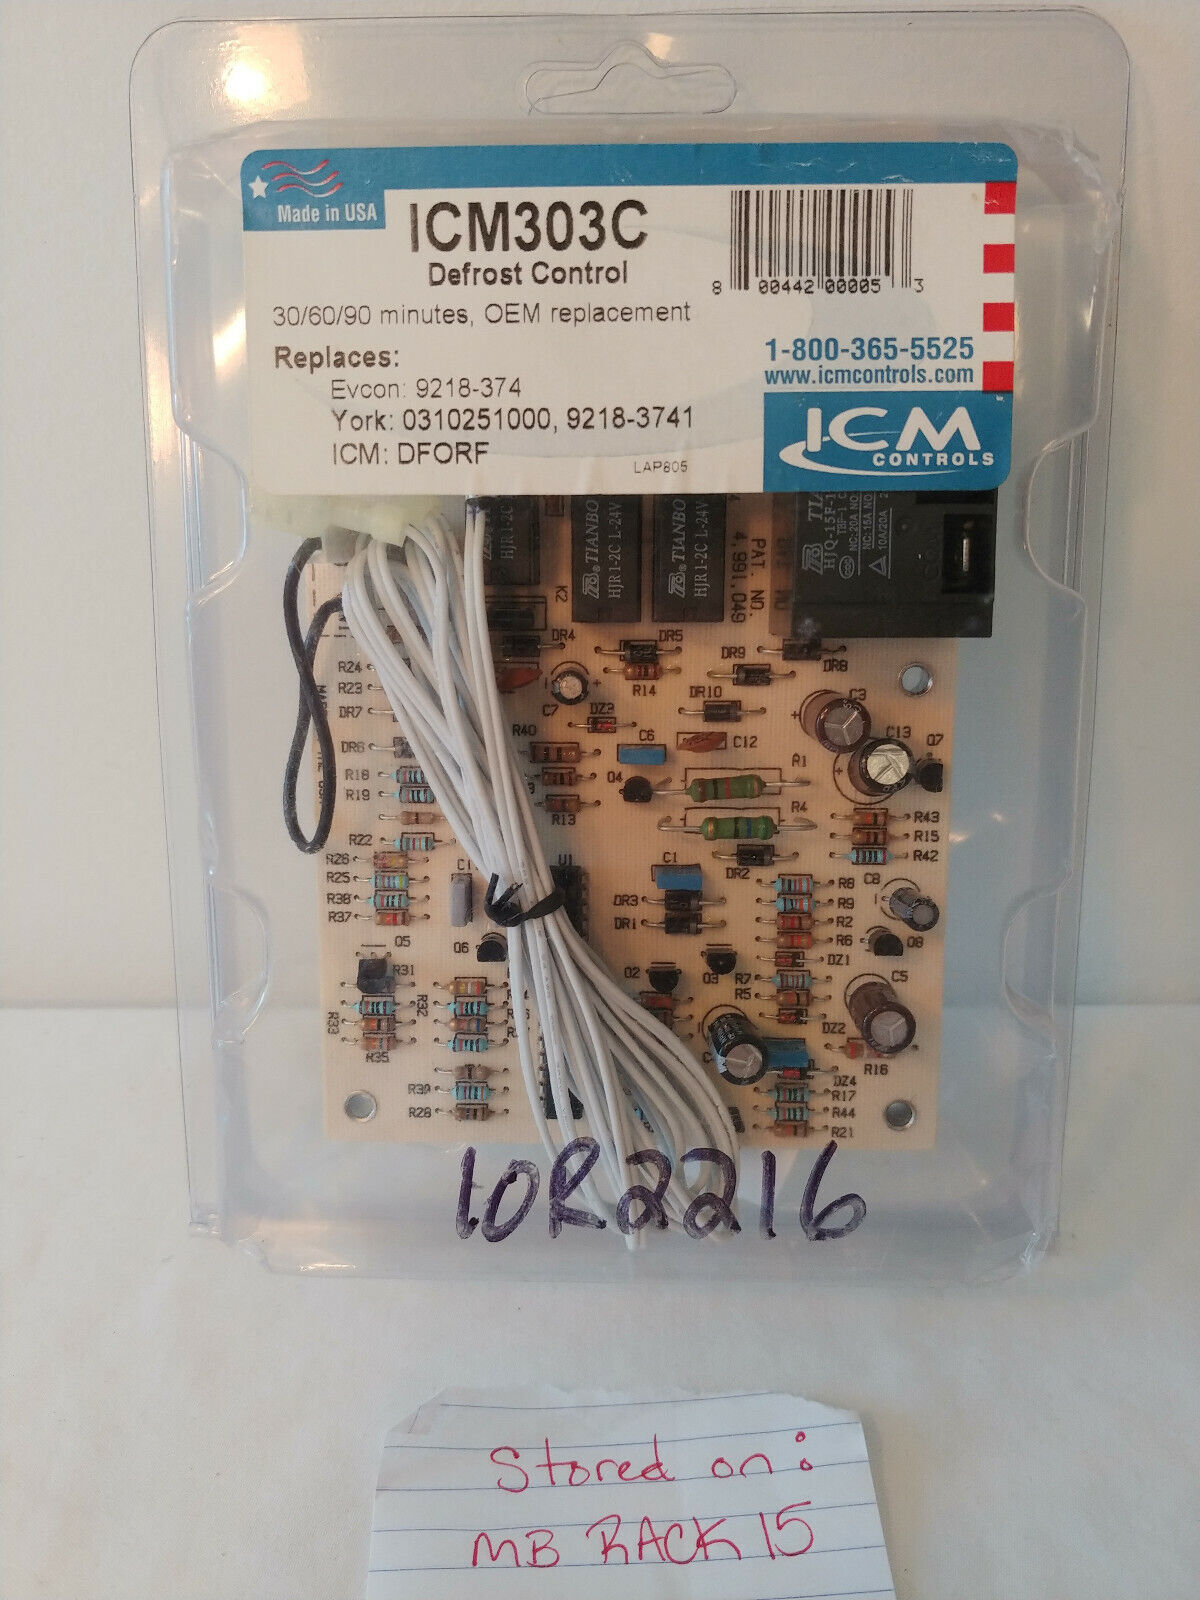 ICM303 Heat Pump Defrost Control for Evcon 9218-374 York 03101251000 9218-3741